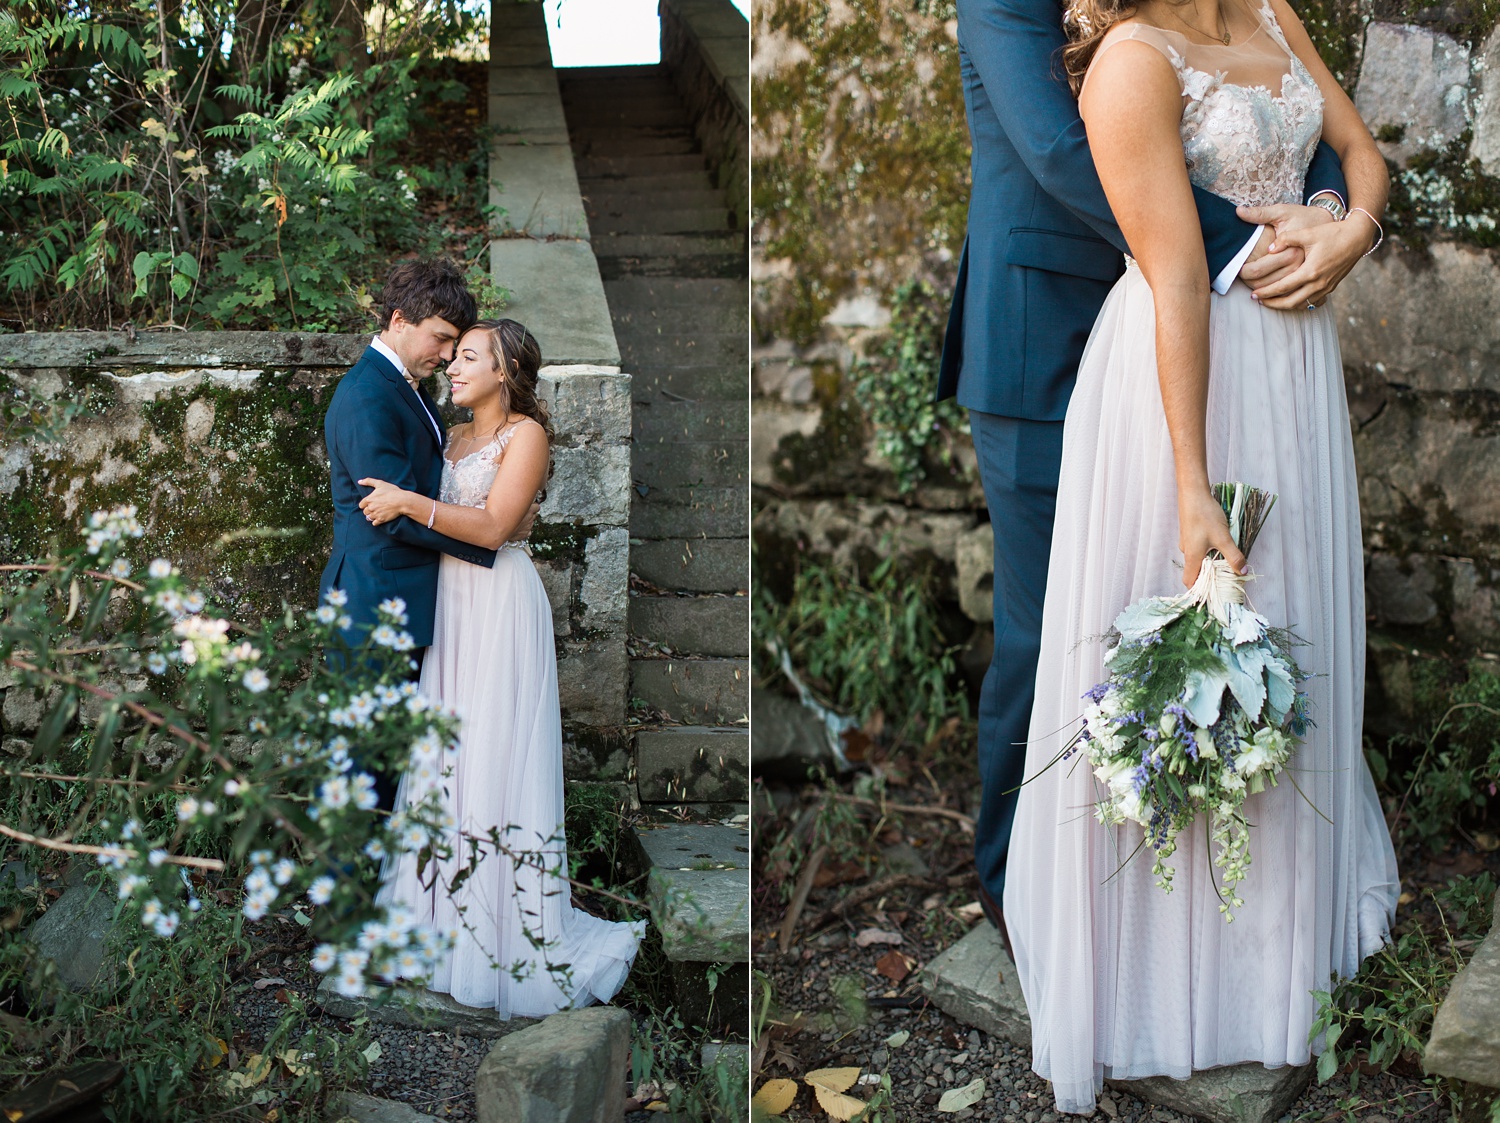 Glen Foerd Mansion Wedding Photography | Philadelphia Wedding Photographer | Yolanda and Michael